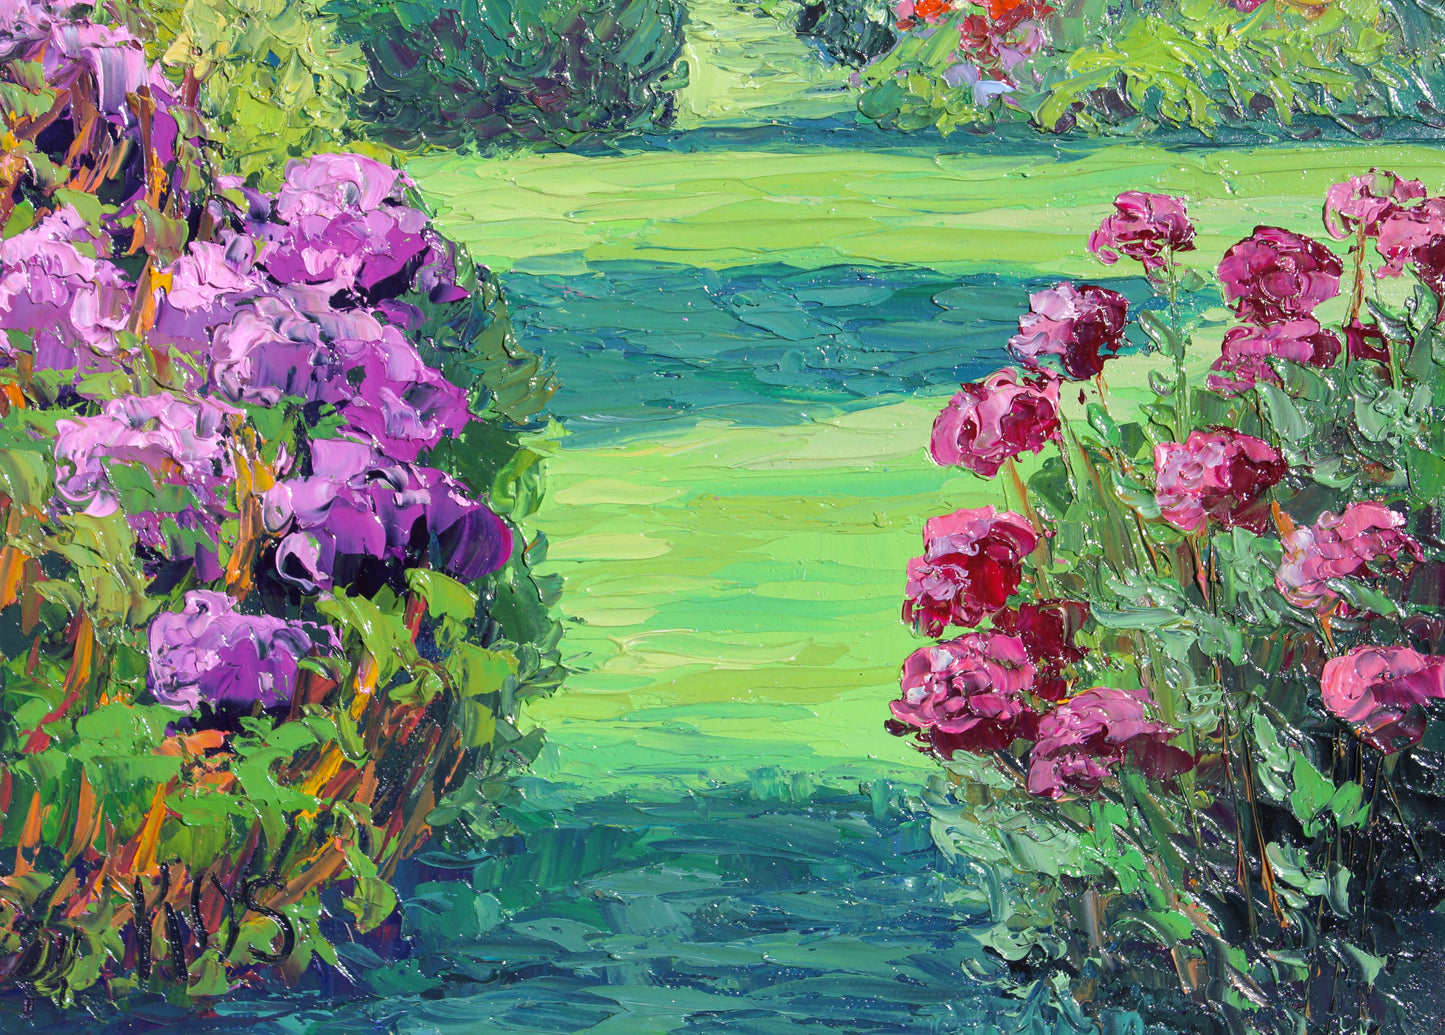 Walled Garden, Original 12" x 9" Garden Landscape Oil Painting On Canvas Panel